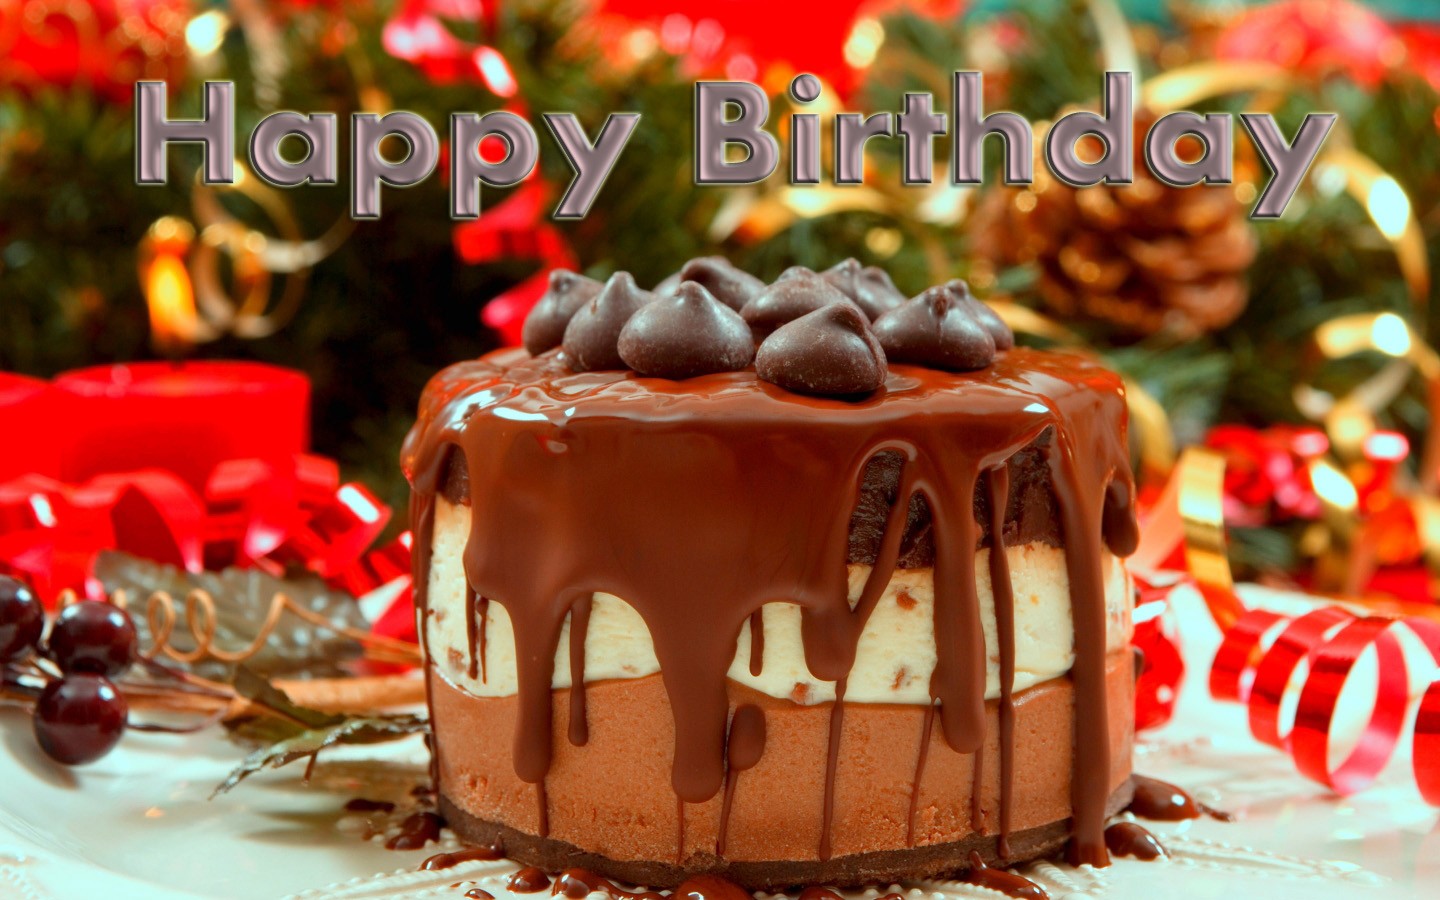 birthday cake for brother wallpaper,food,dessert,cake,cuisine,chocolate cake